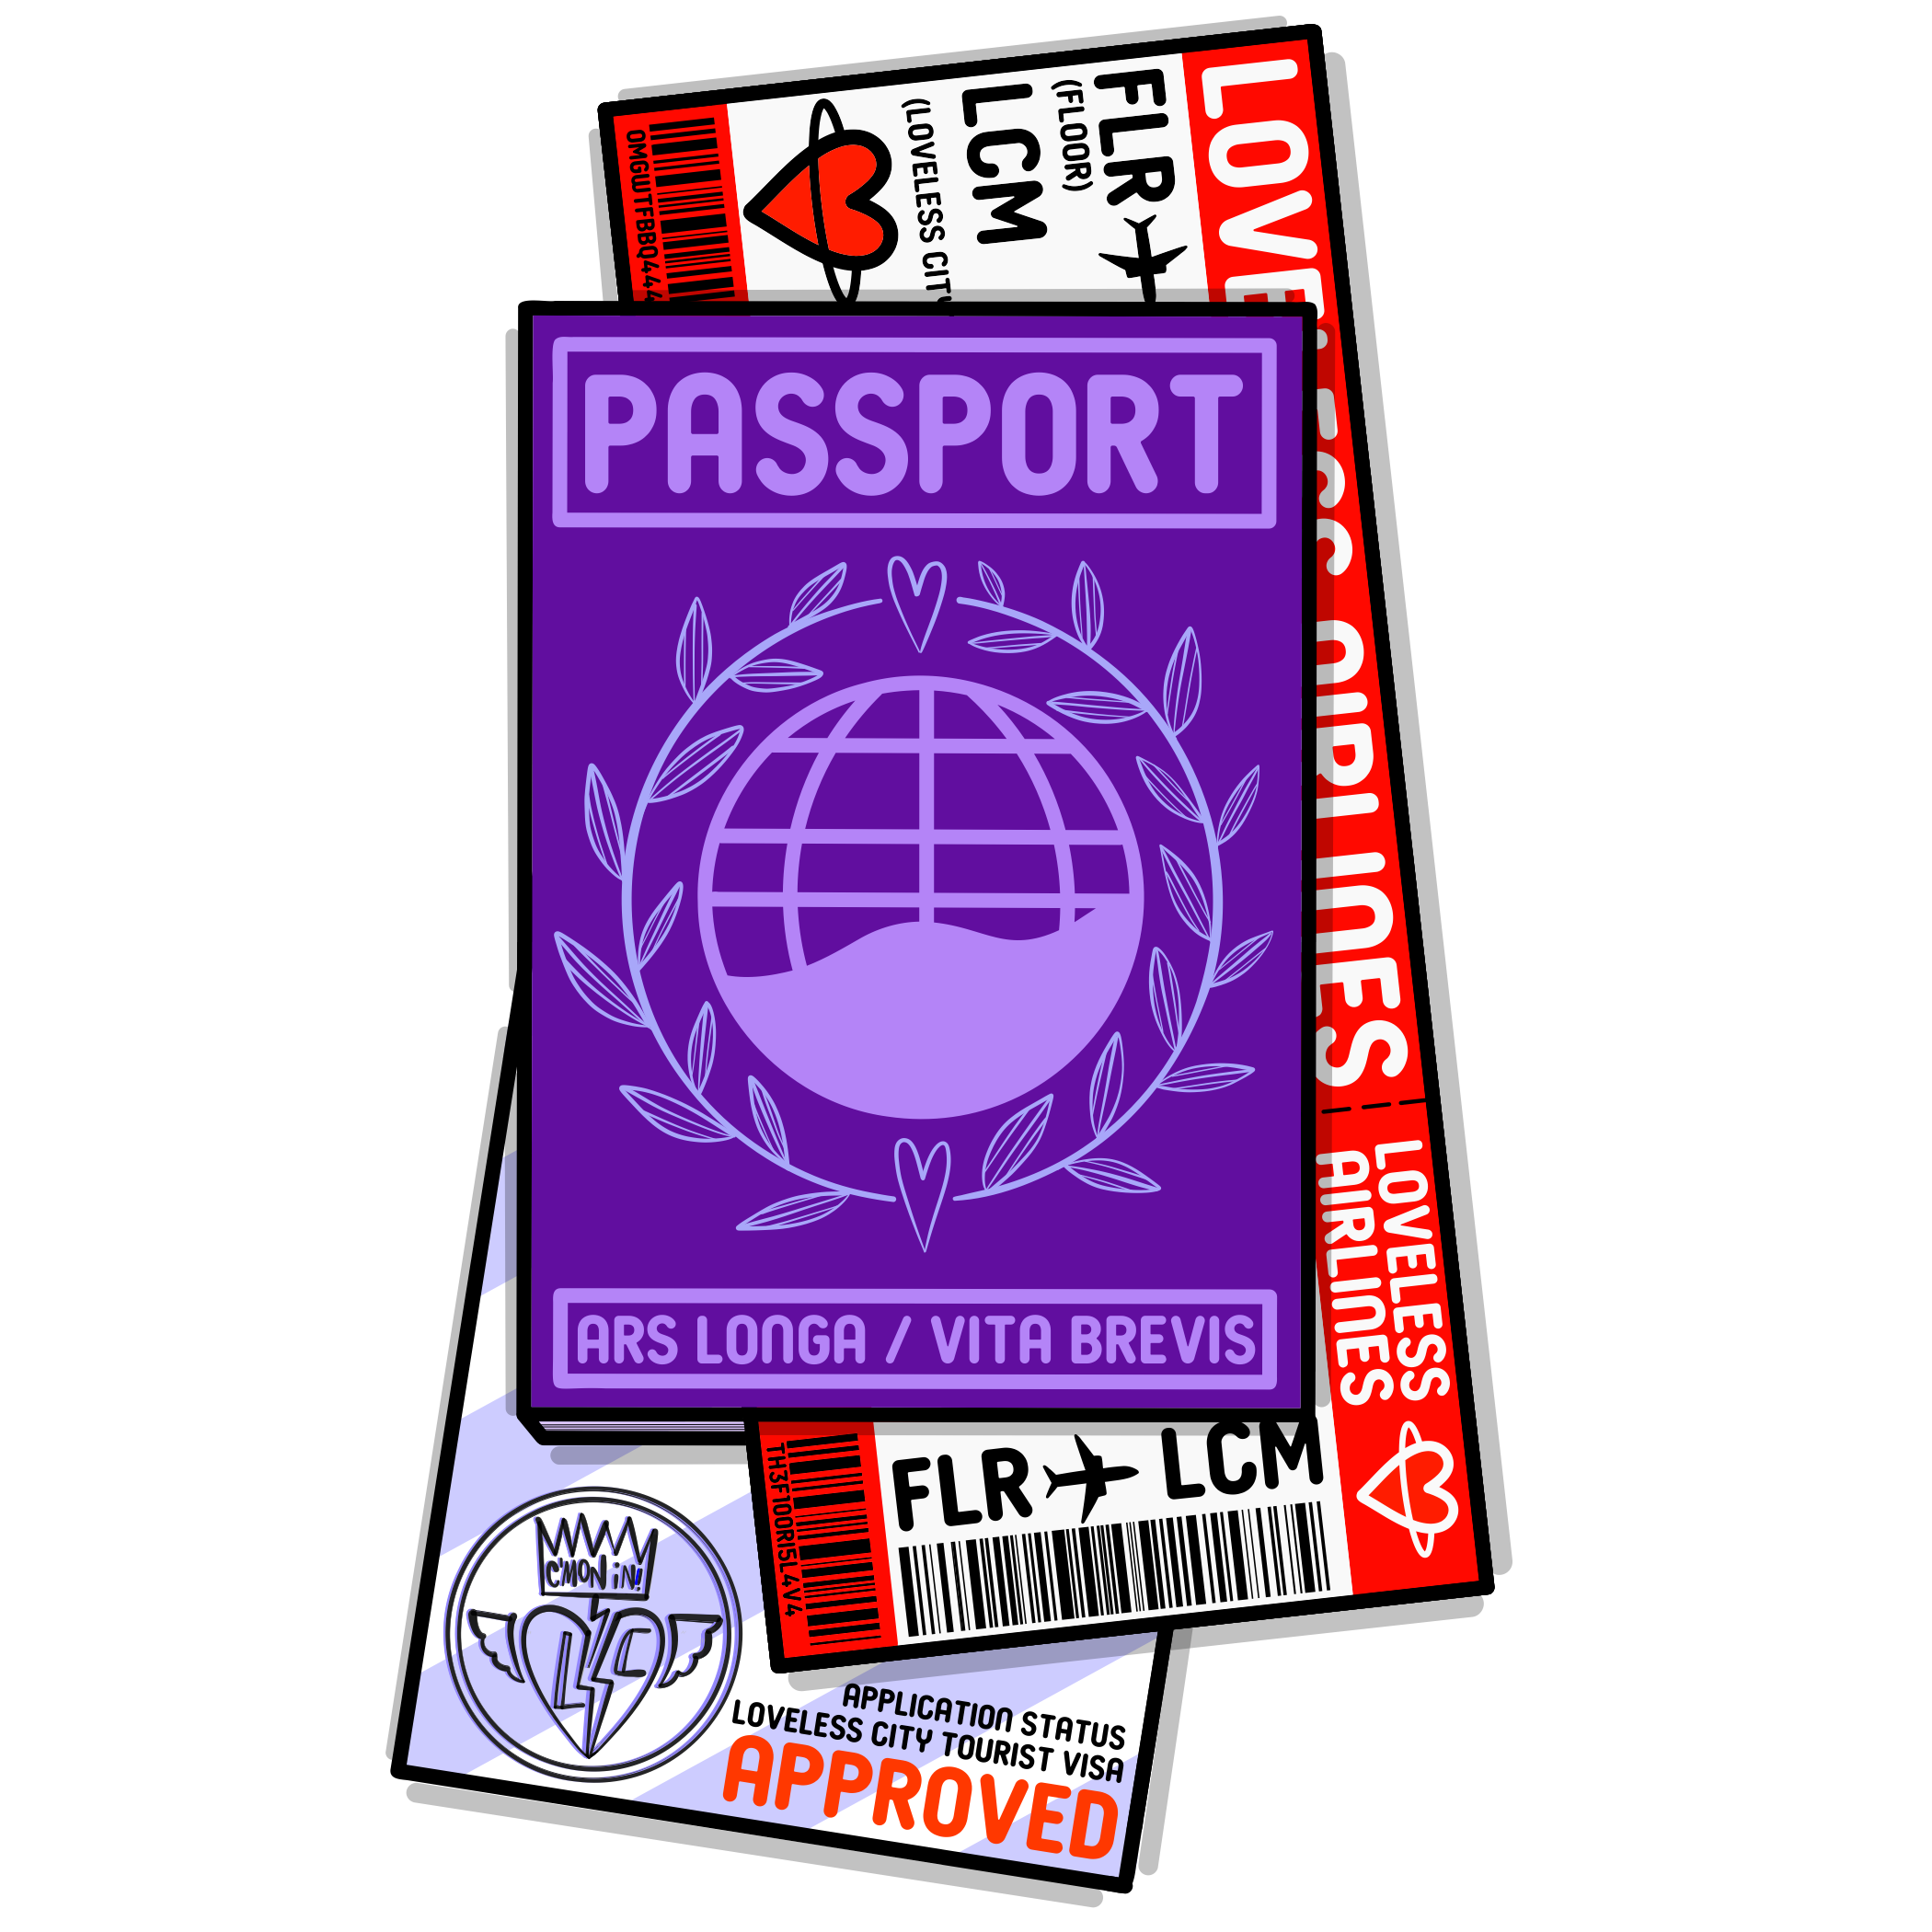 Passport V1 Metropass